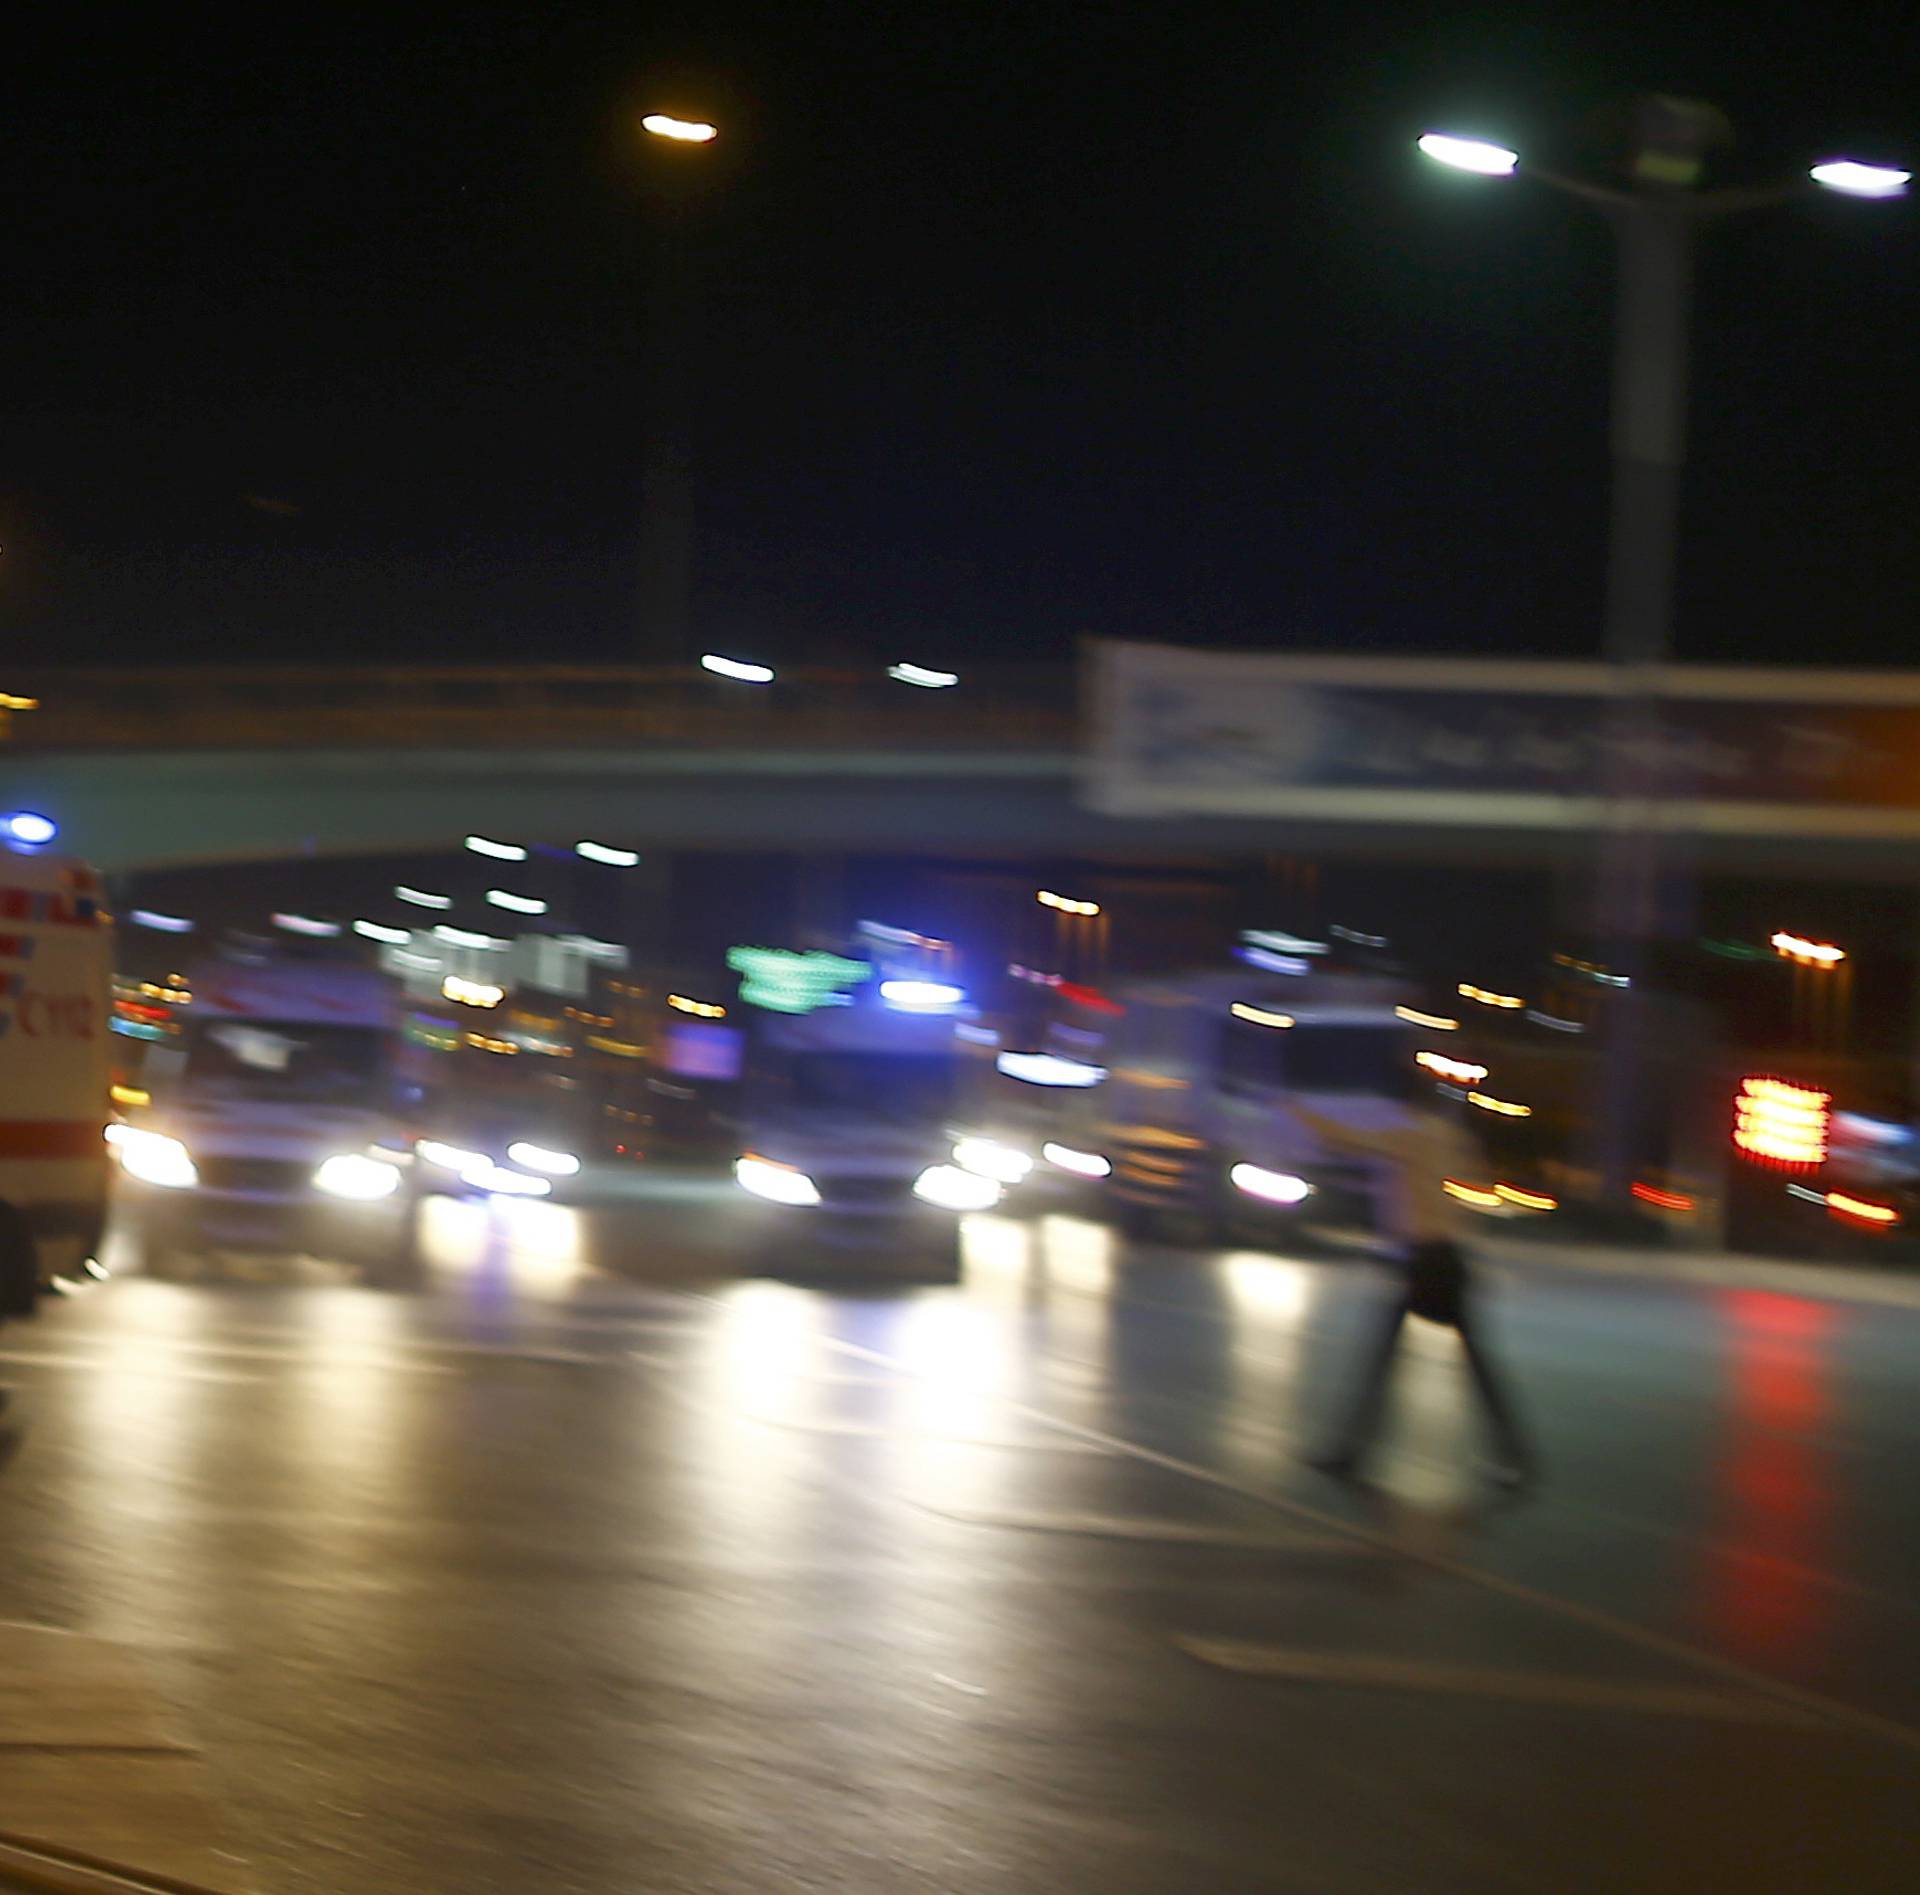 Ambulance cars arrive at Turkey's largest airport, Istanbul Ataturk